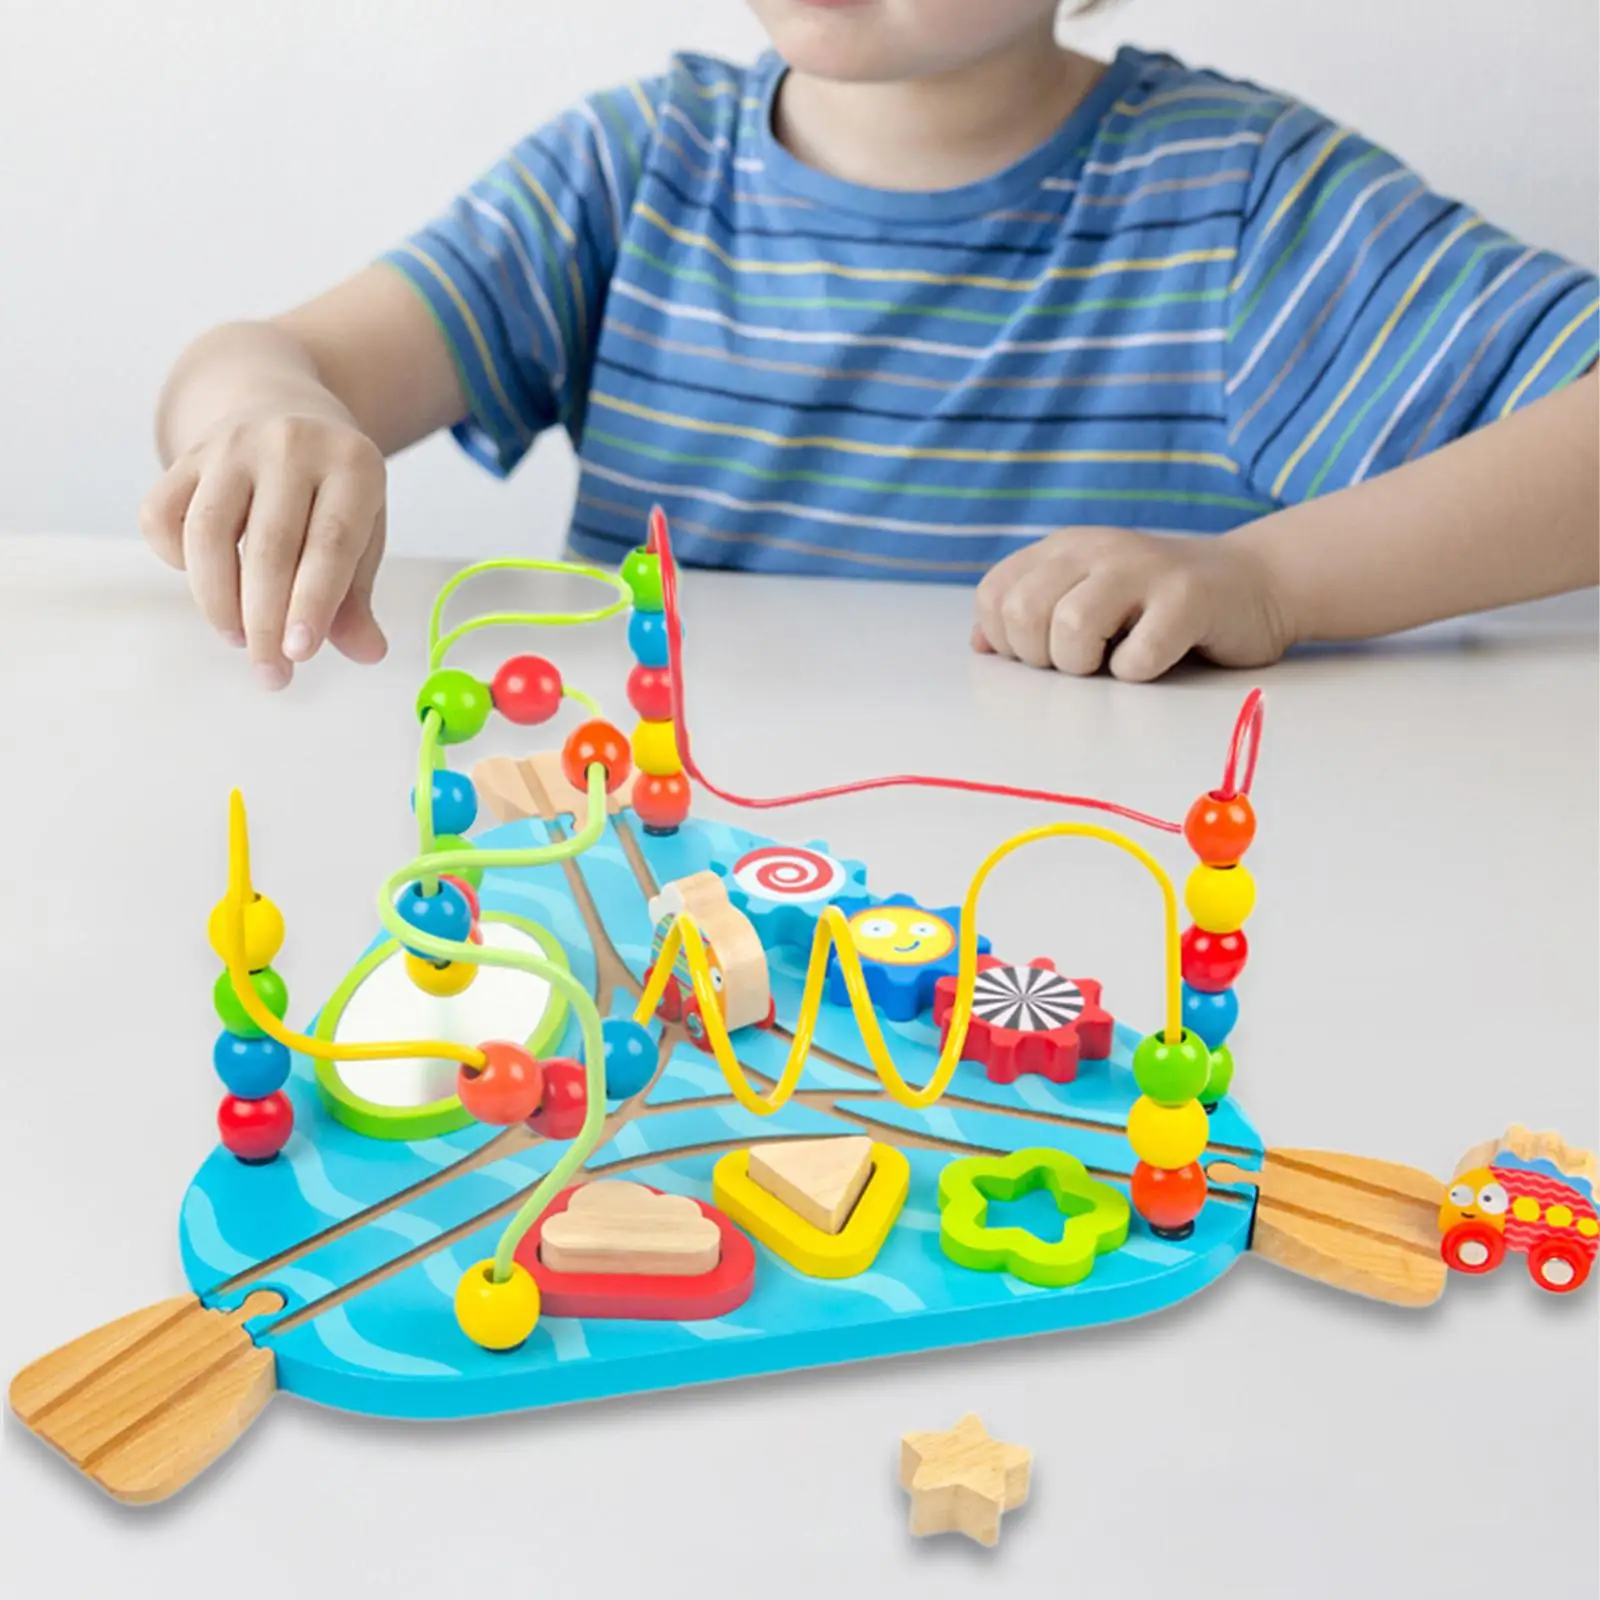 

Bead Maze Toy Fine Motor Skills Preschool Educational Developmental Colorful Roller Coaster Game for Children Birthday Gifts